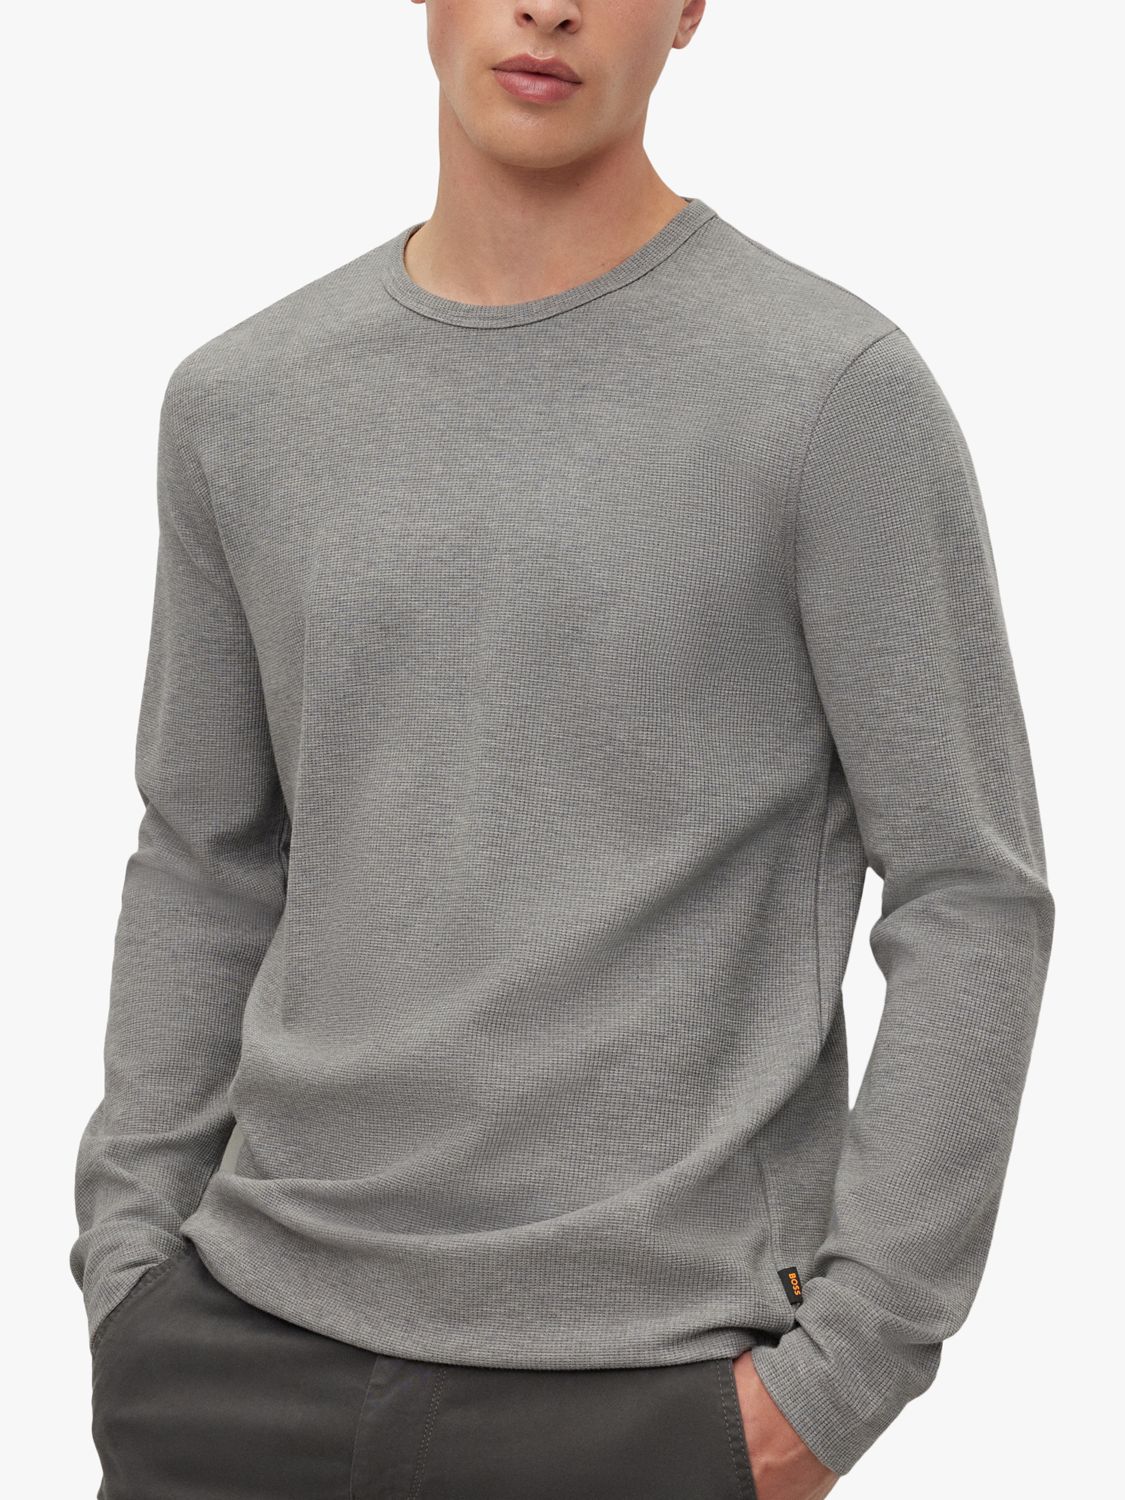 & Light/Pastel Grey Lewis Sleeve T-Shirt, BOSS Partners John Tempesto at Long